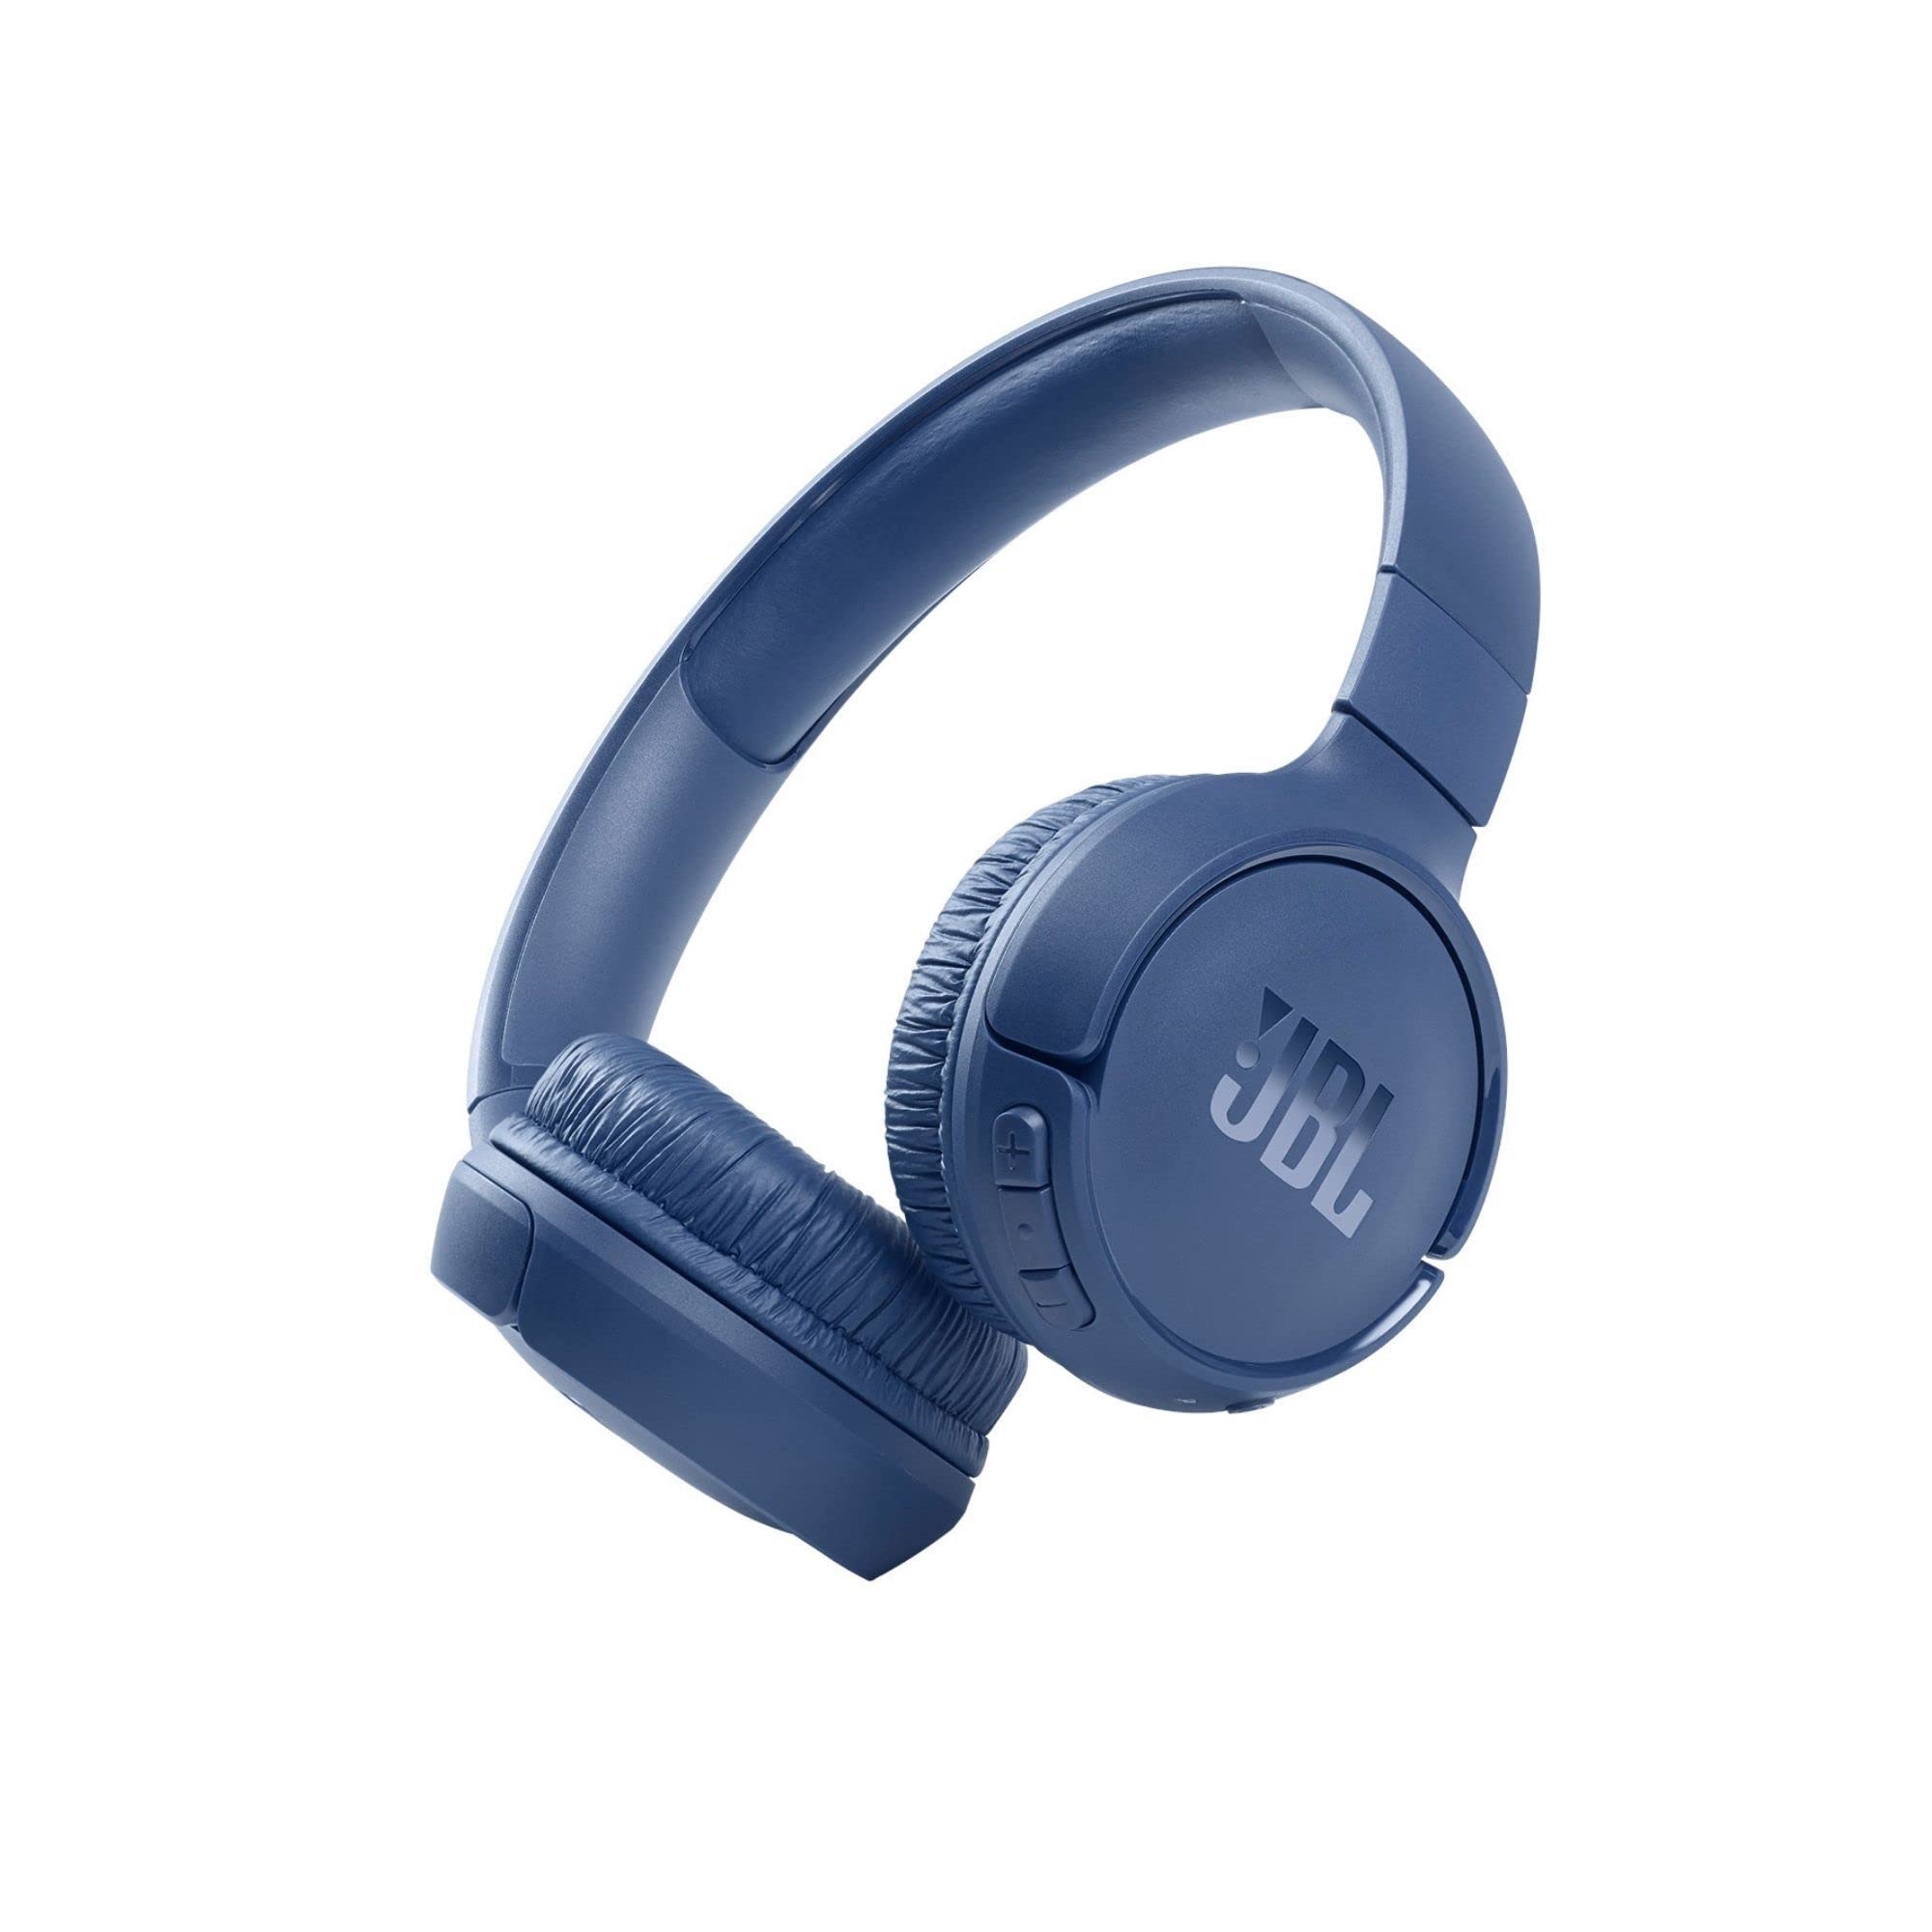 Mua Jbl Tune 510Bt: Wireless On-Ear Headphones With Purebass Sound - Blue  Trên Amazon Mỹ Chính Hãng 2022 | Giaonhan247